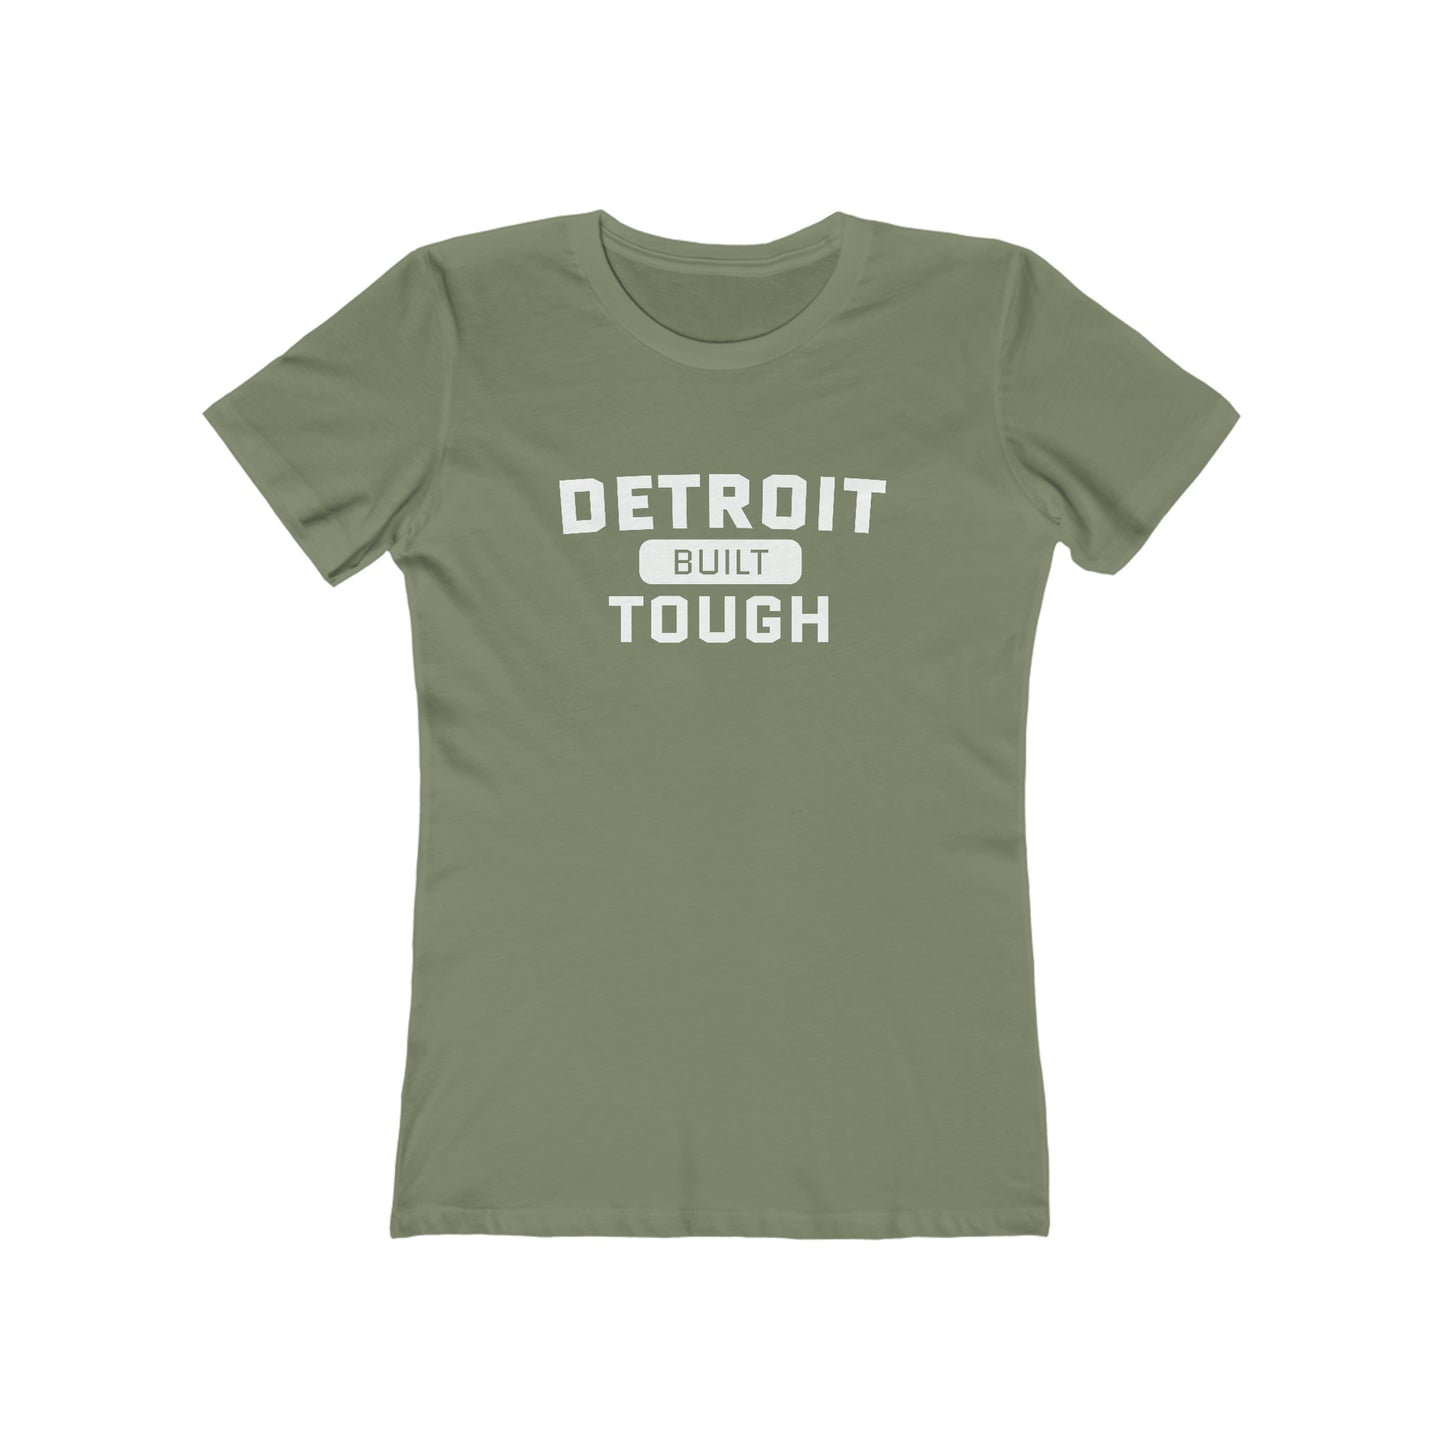 'Built Detroit Tough' T-Shirt | Women's Boyfriend Cut